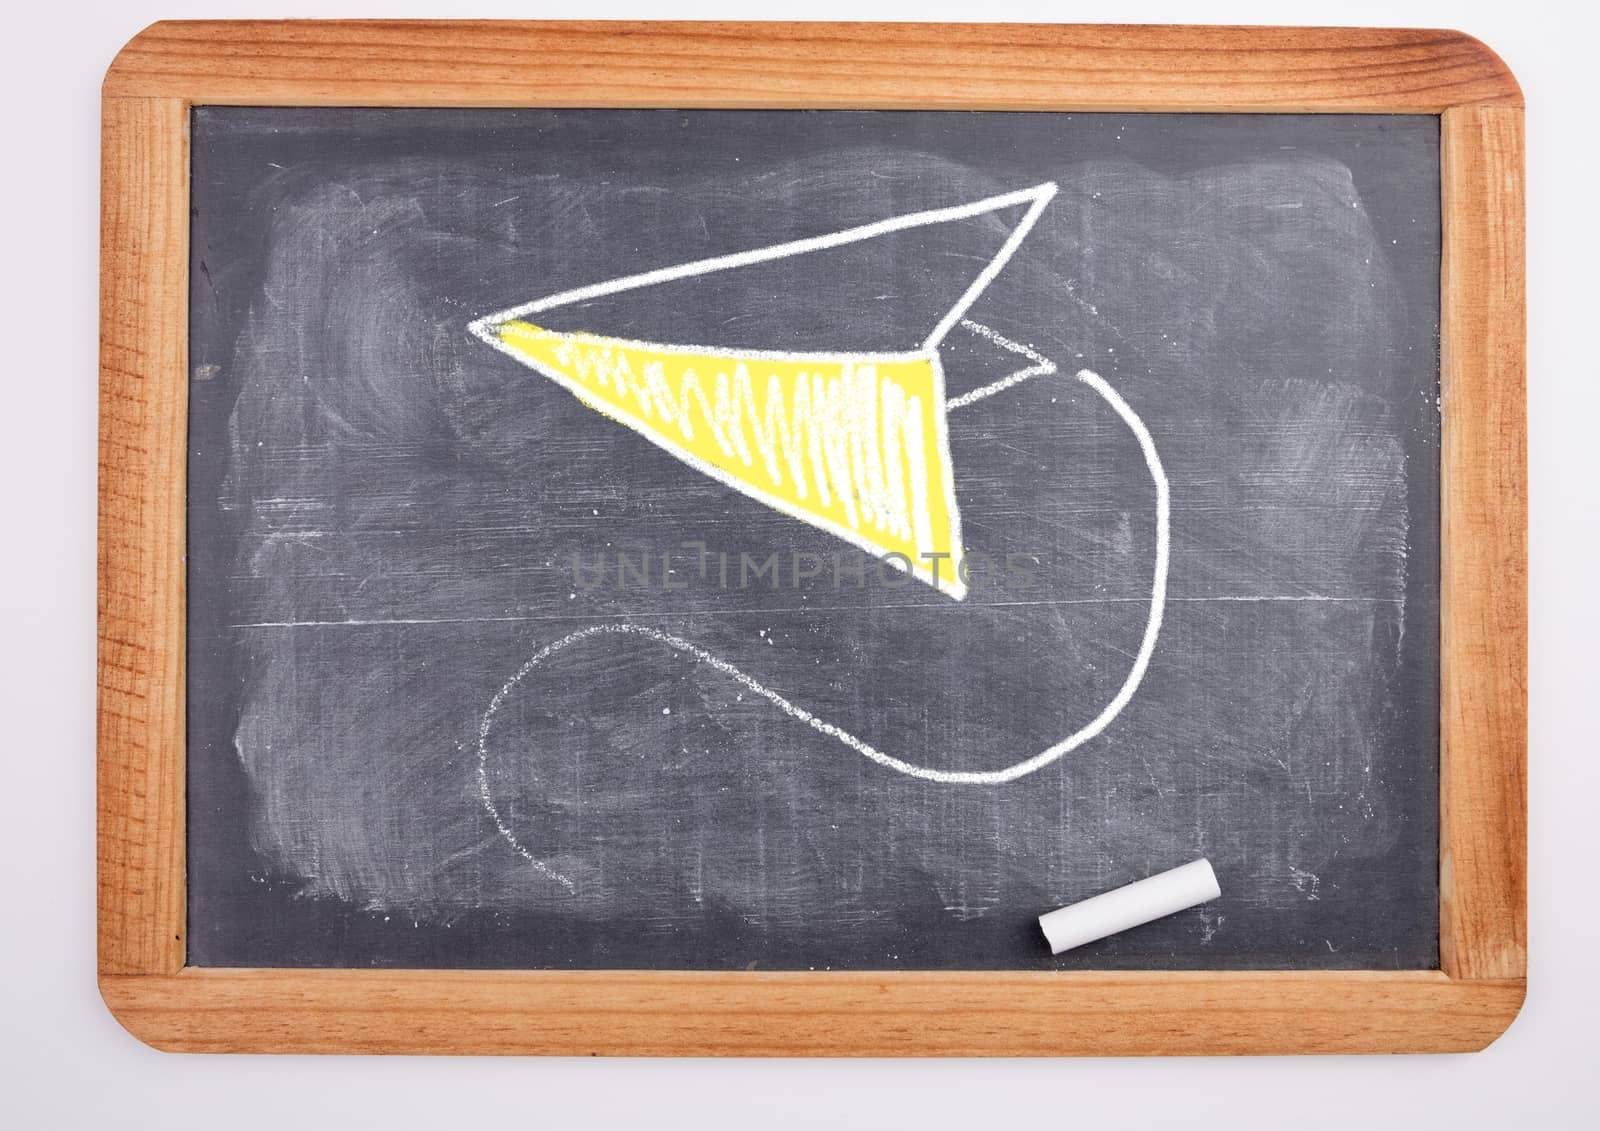 Paper airplane education drawings on blackboard for school by Wavebreakmedia